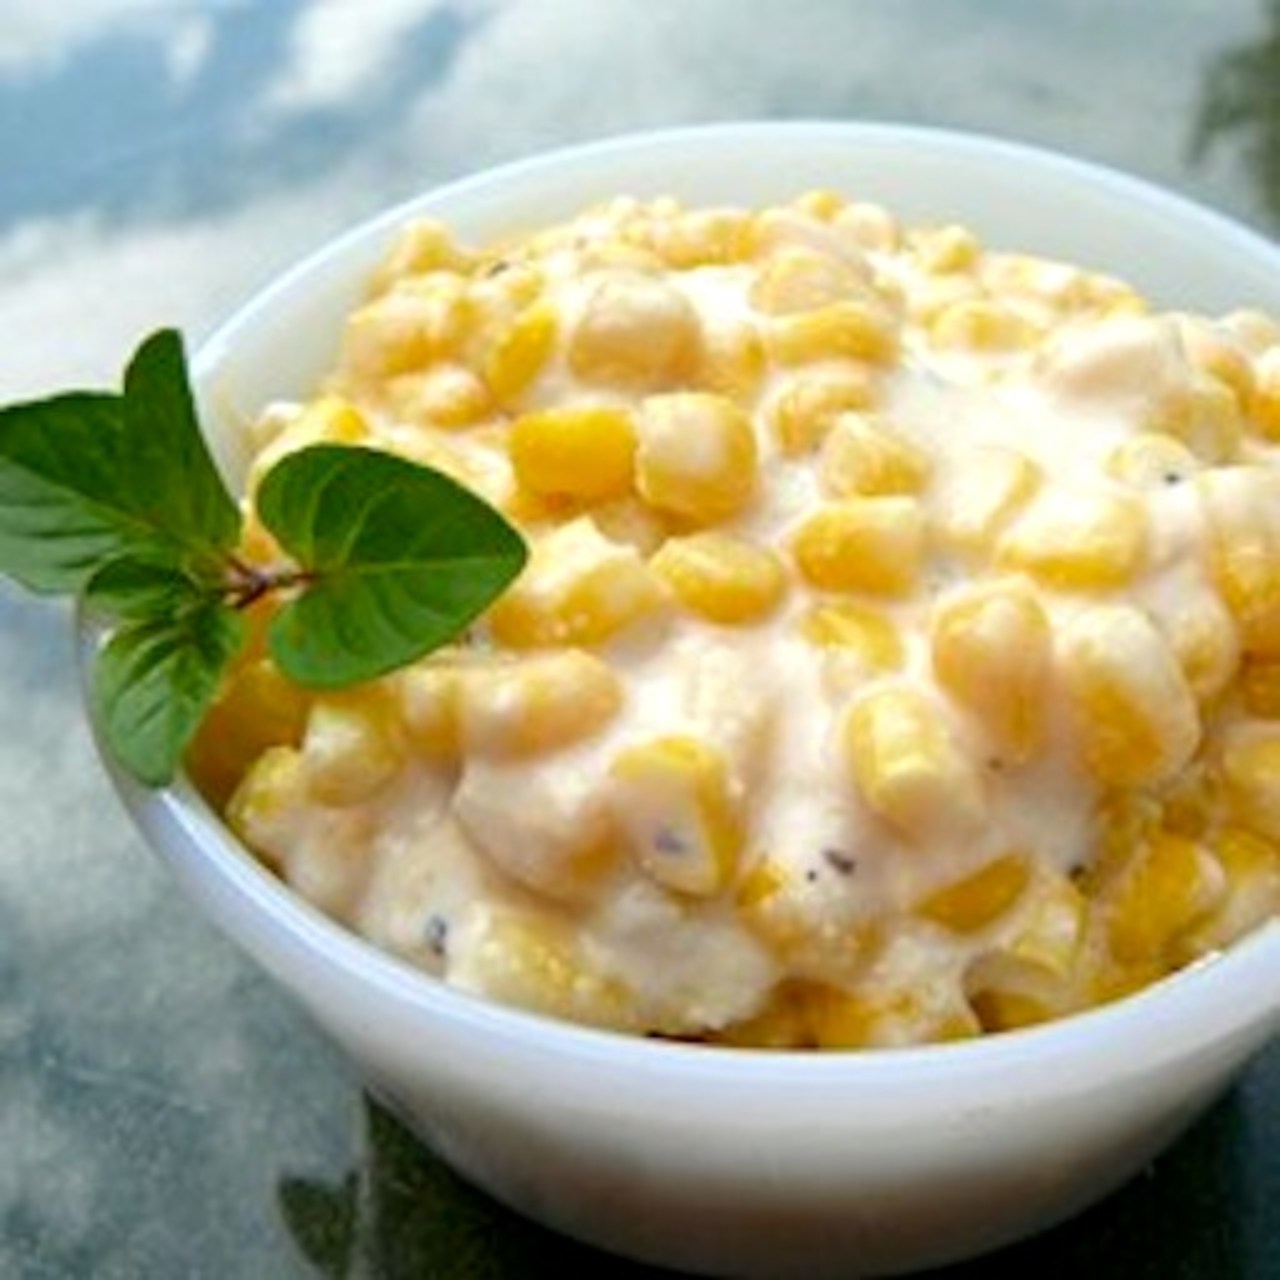 Rudy S Style Creamed Corn Recipe Image Of Food Recipe